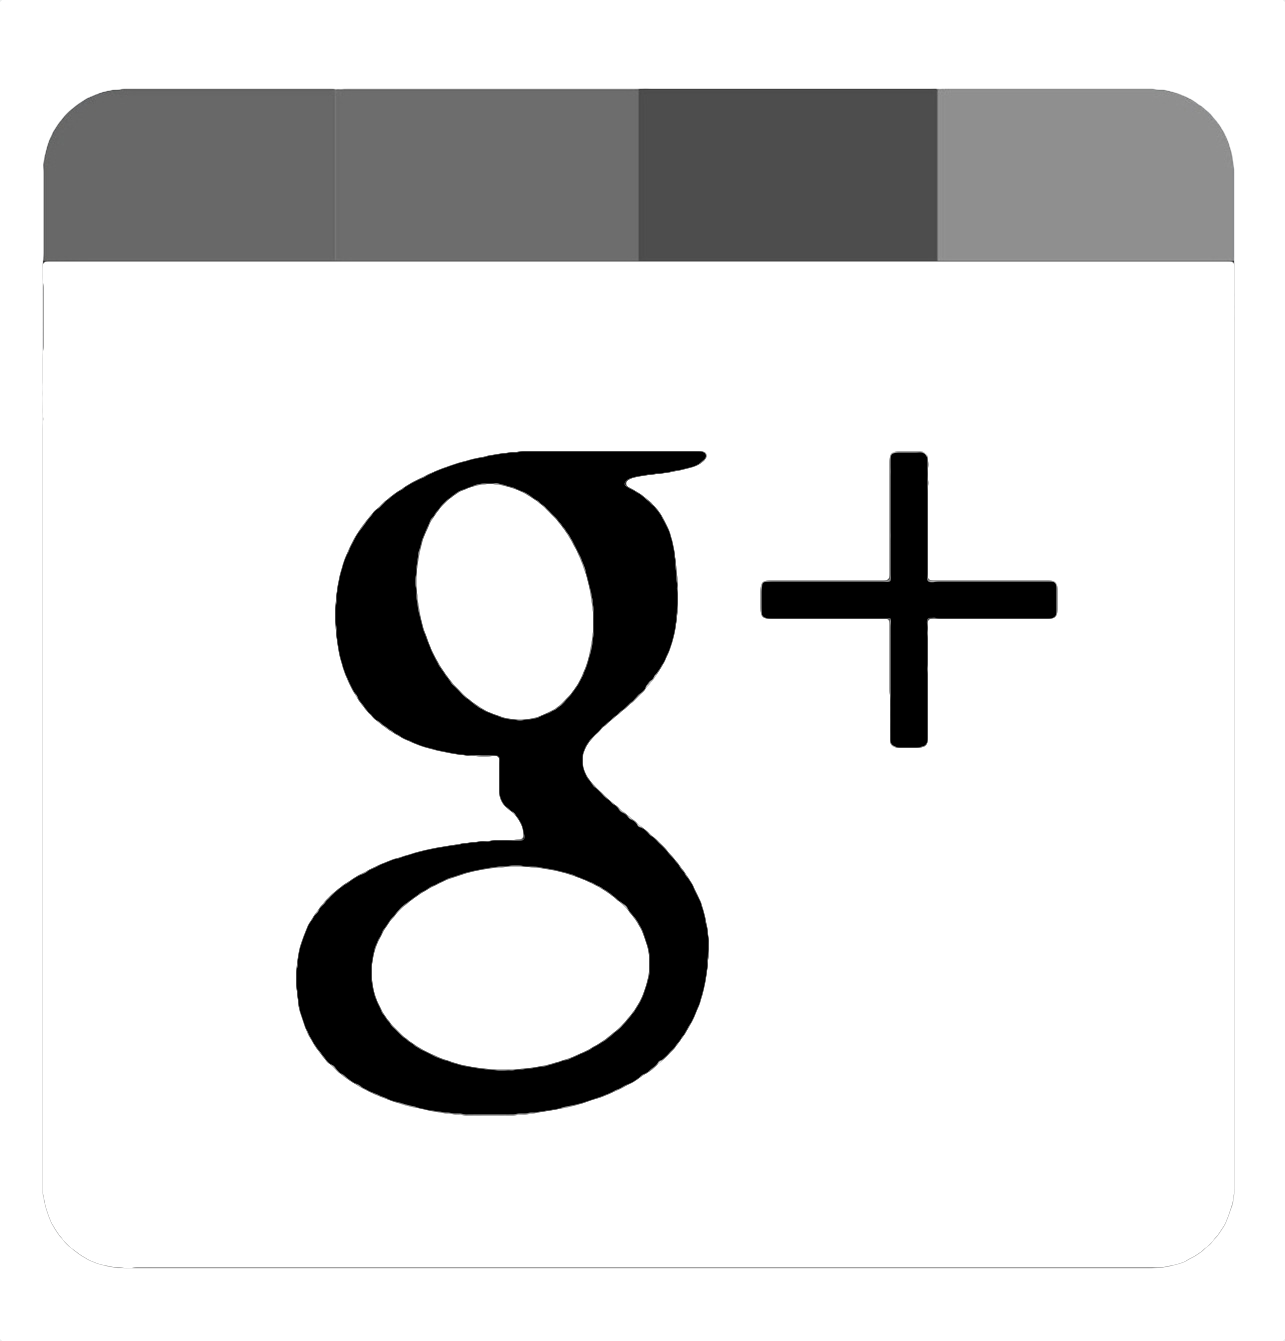 Google Plus profile link